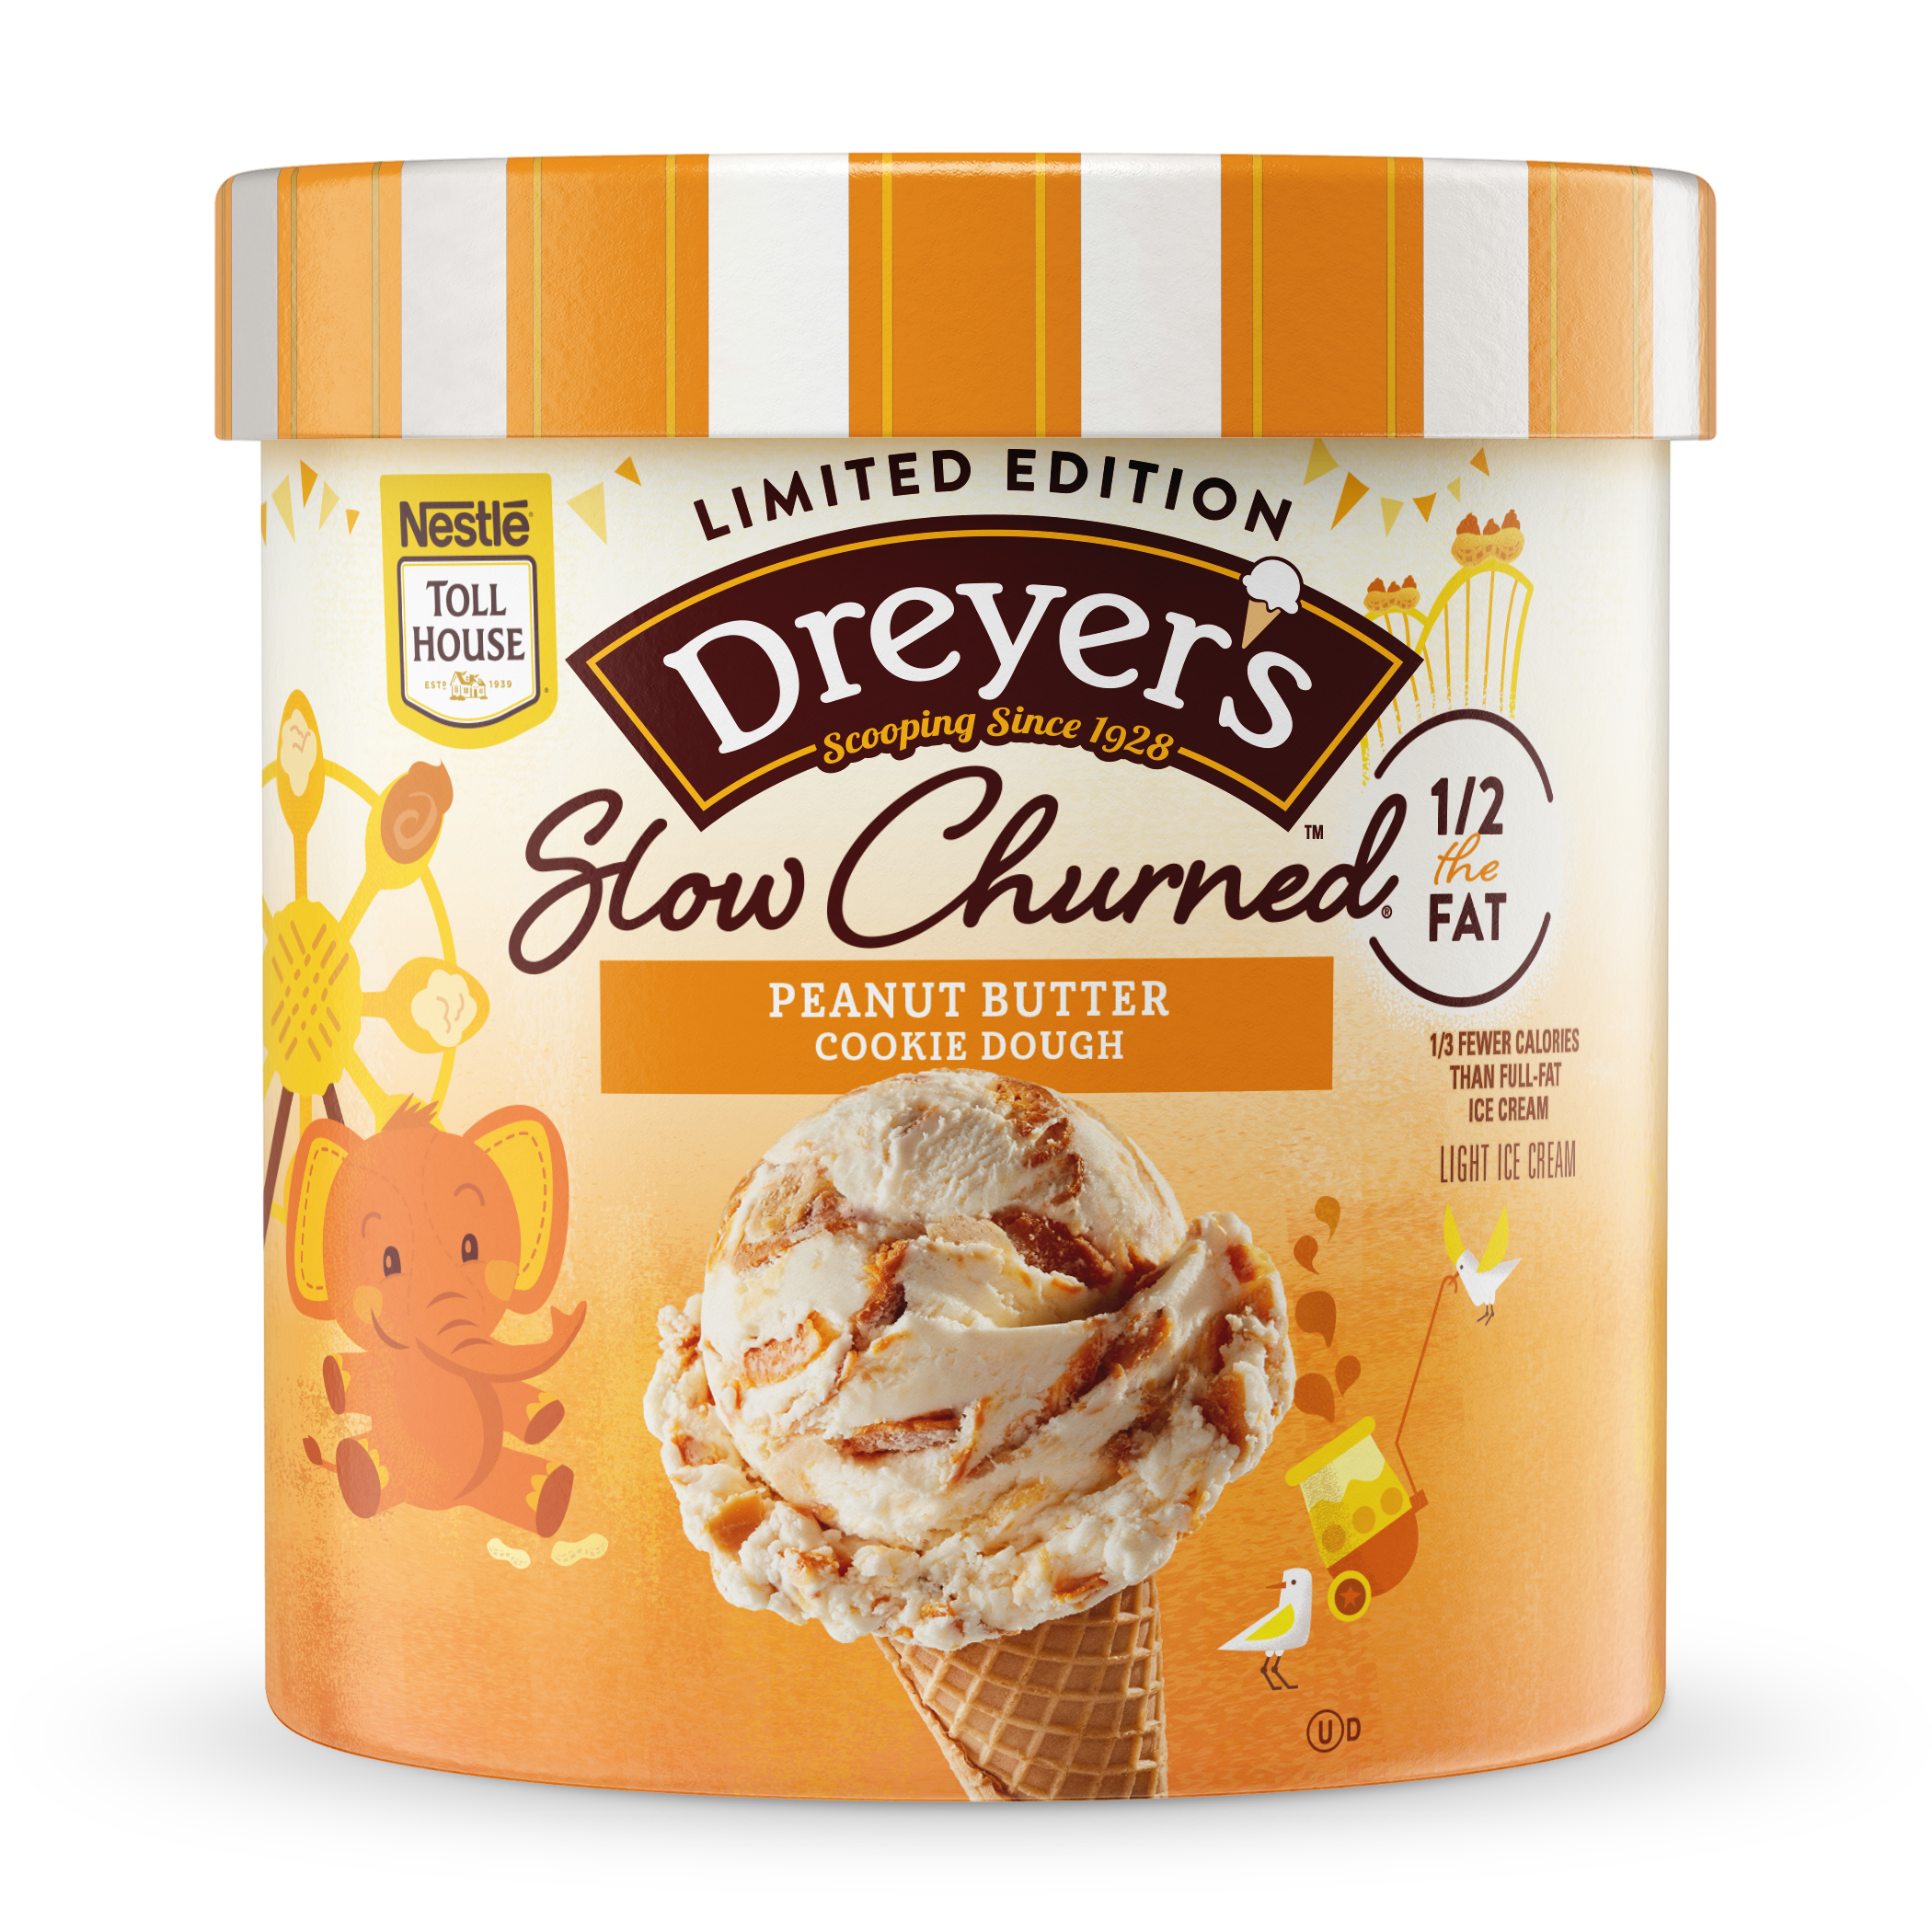 Carton of Dreyer's slow-churned peanut butter cookie dough ice cream